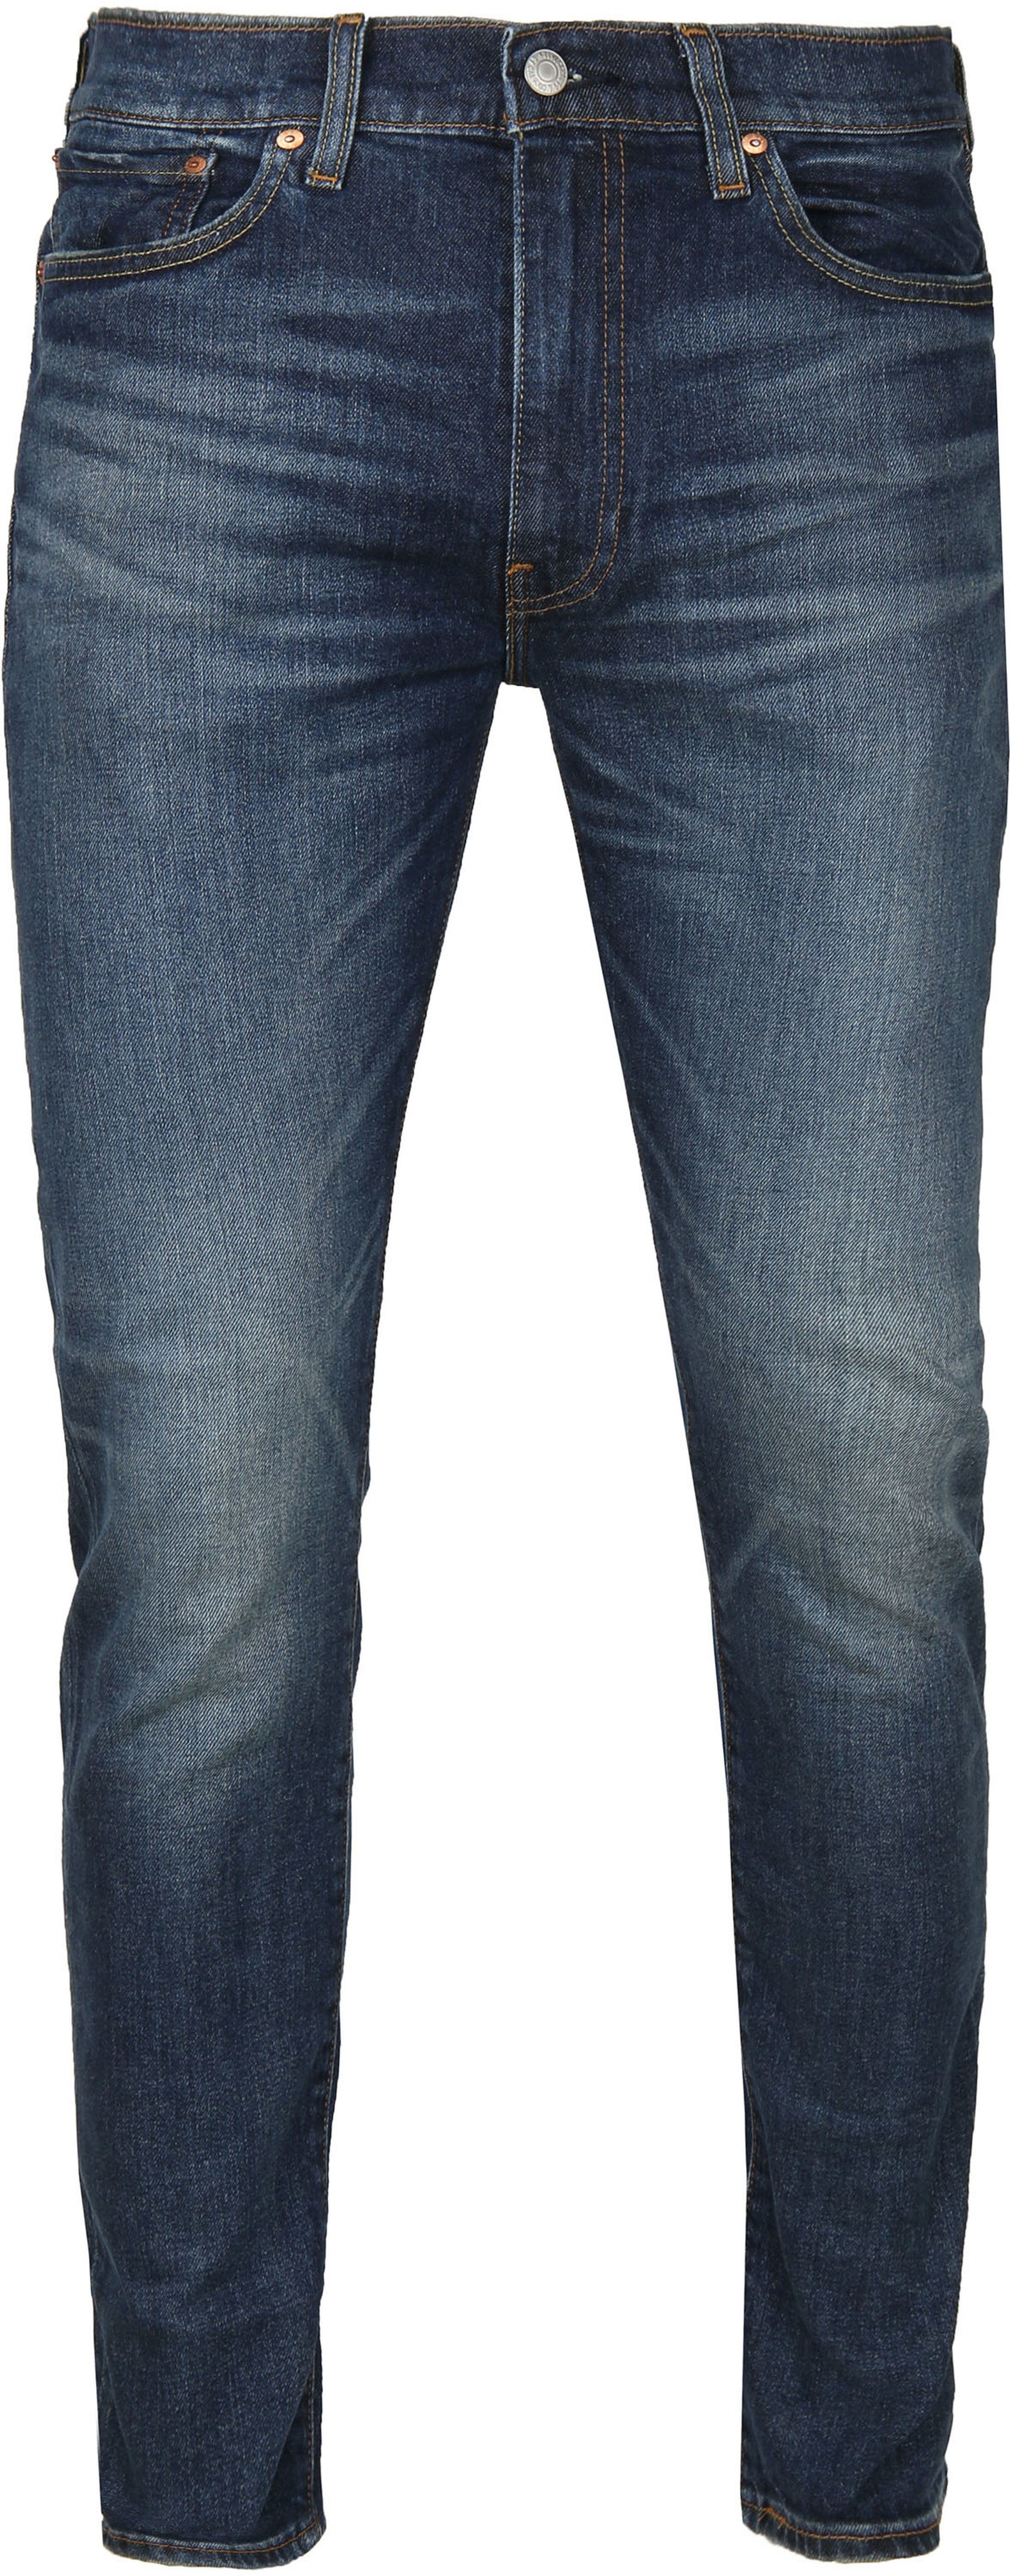 Levi's 512 Jeans Slim Fit Light Denim Blue size W 31